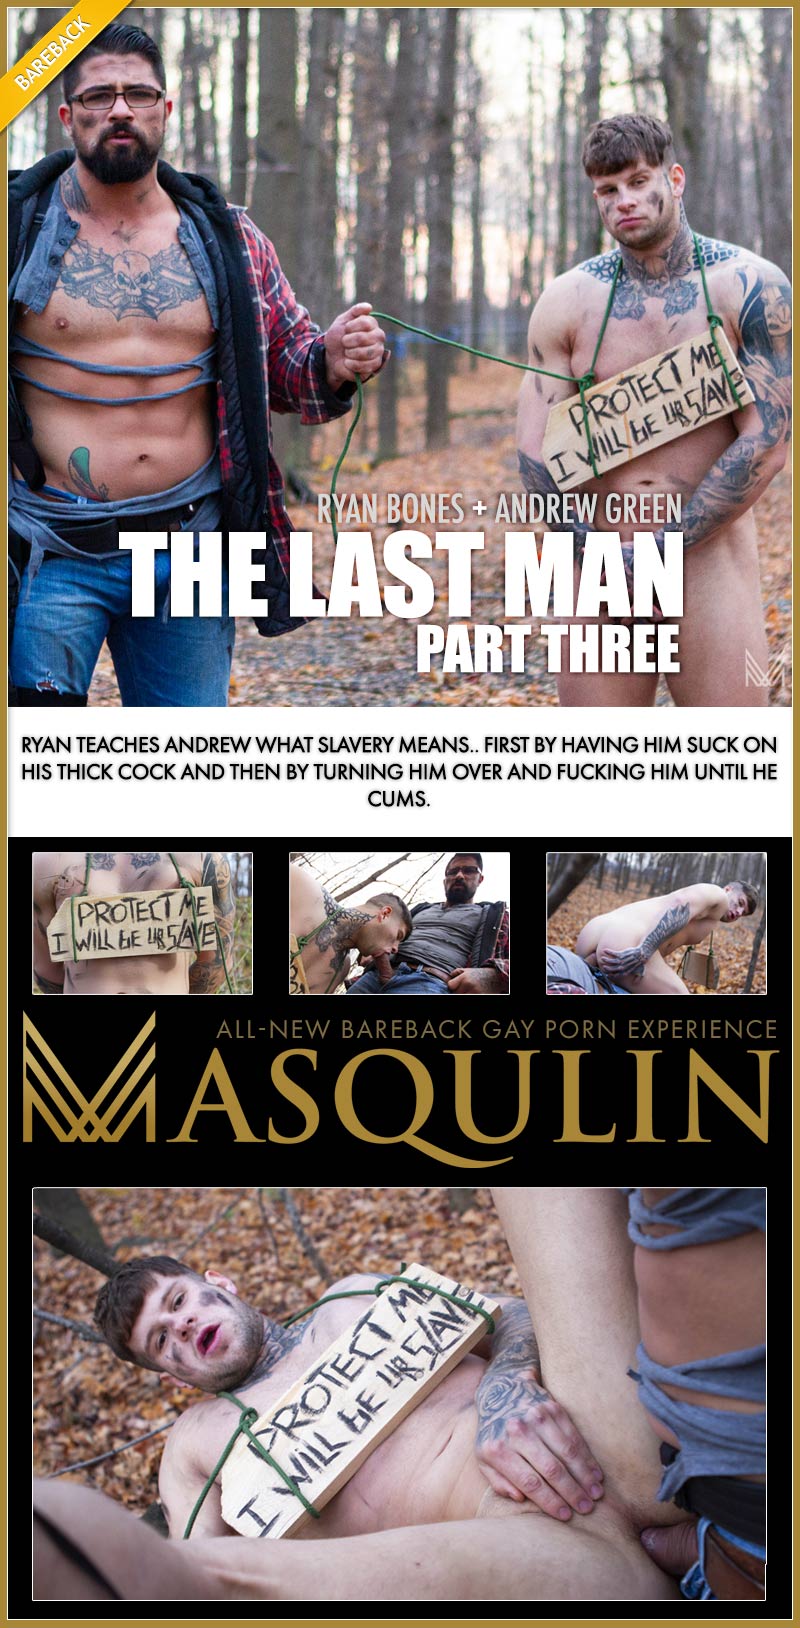 The Last Men, Part Three (Ryan Bones Fucks Andrew Green) at MASQULIN